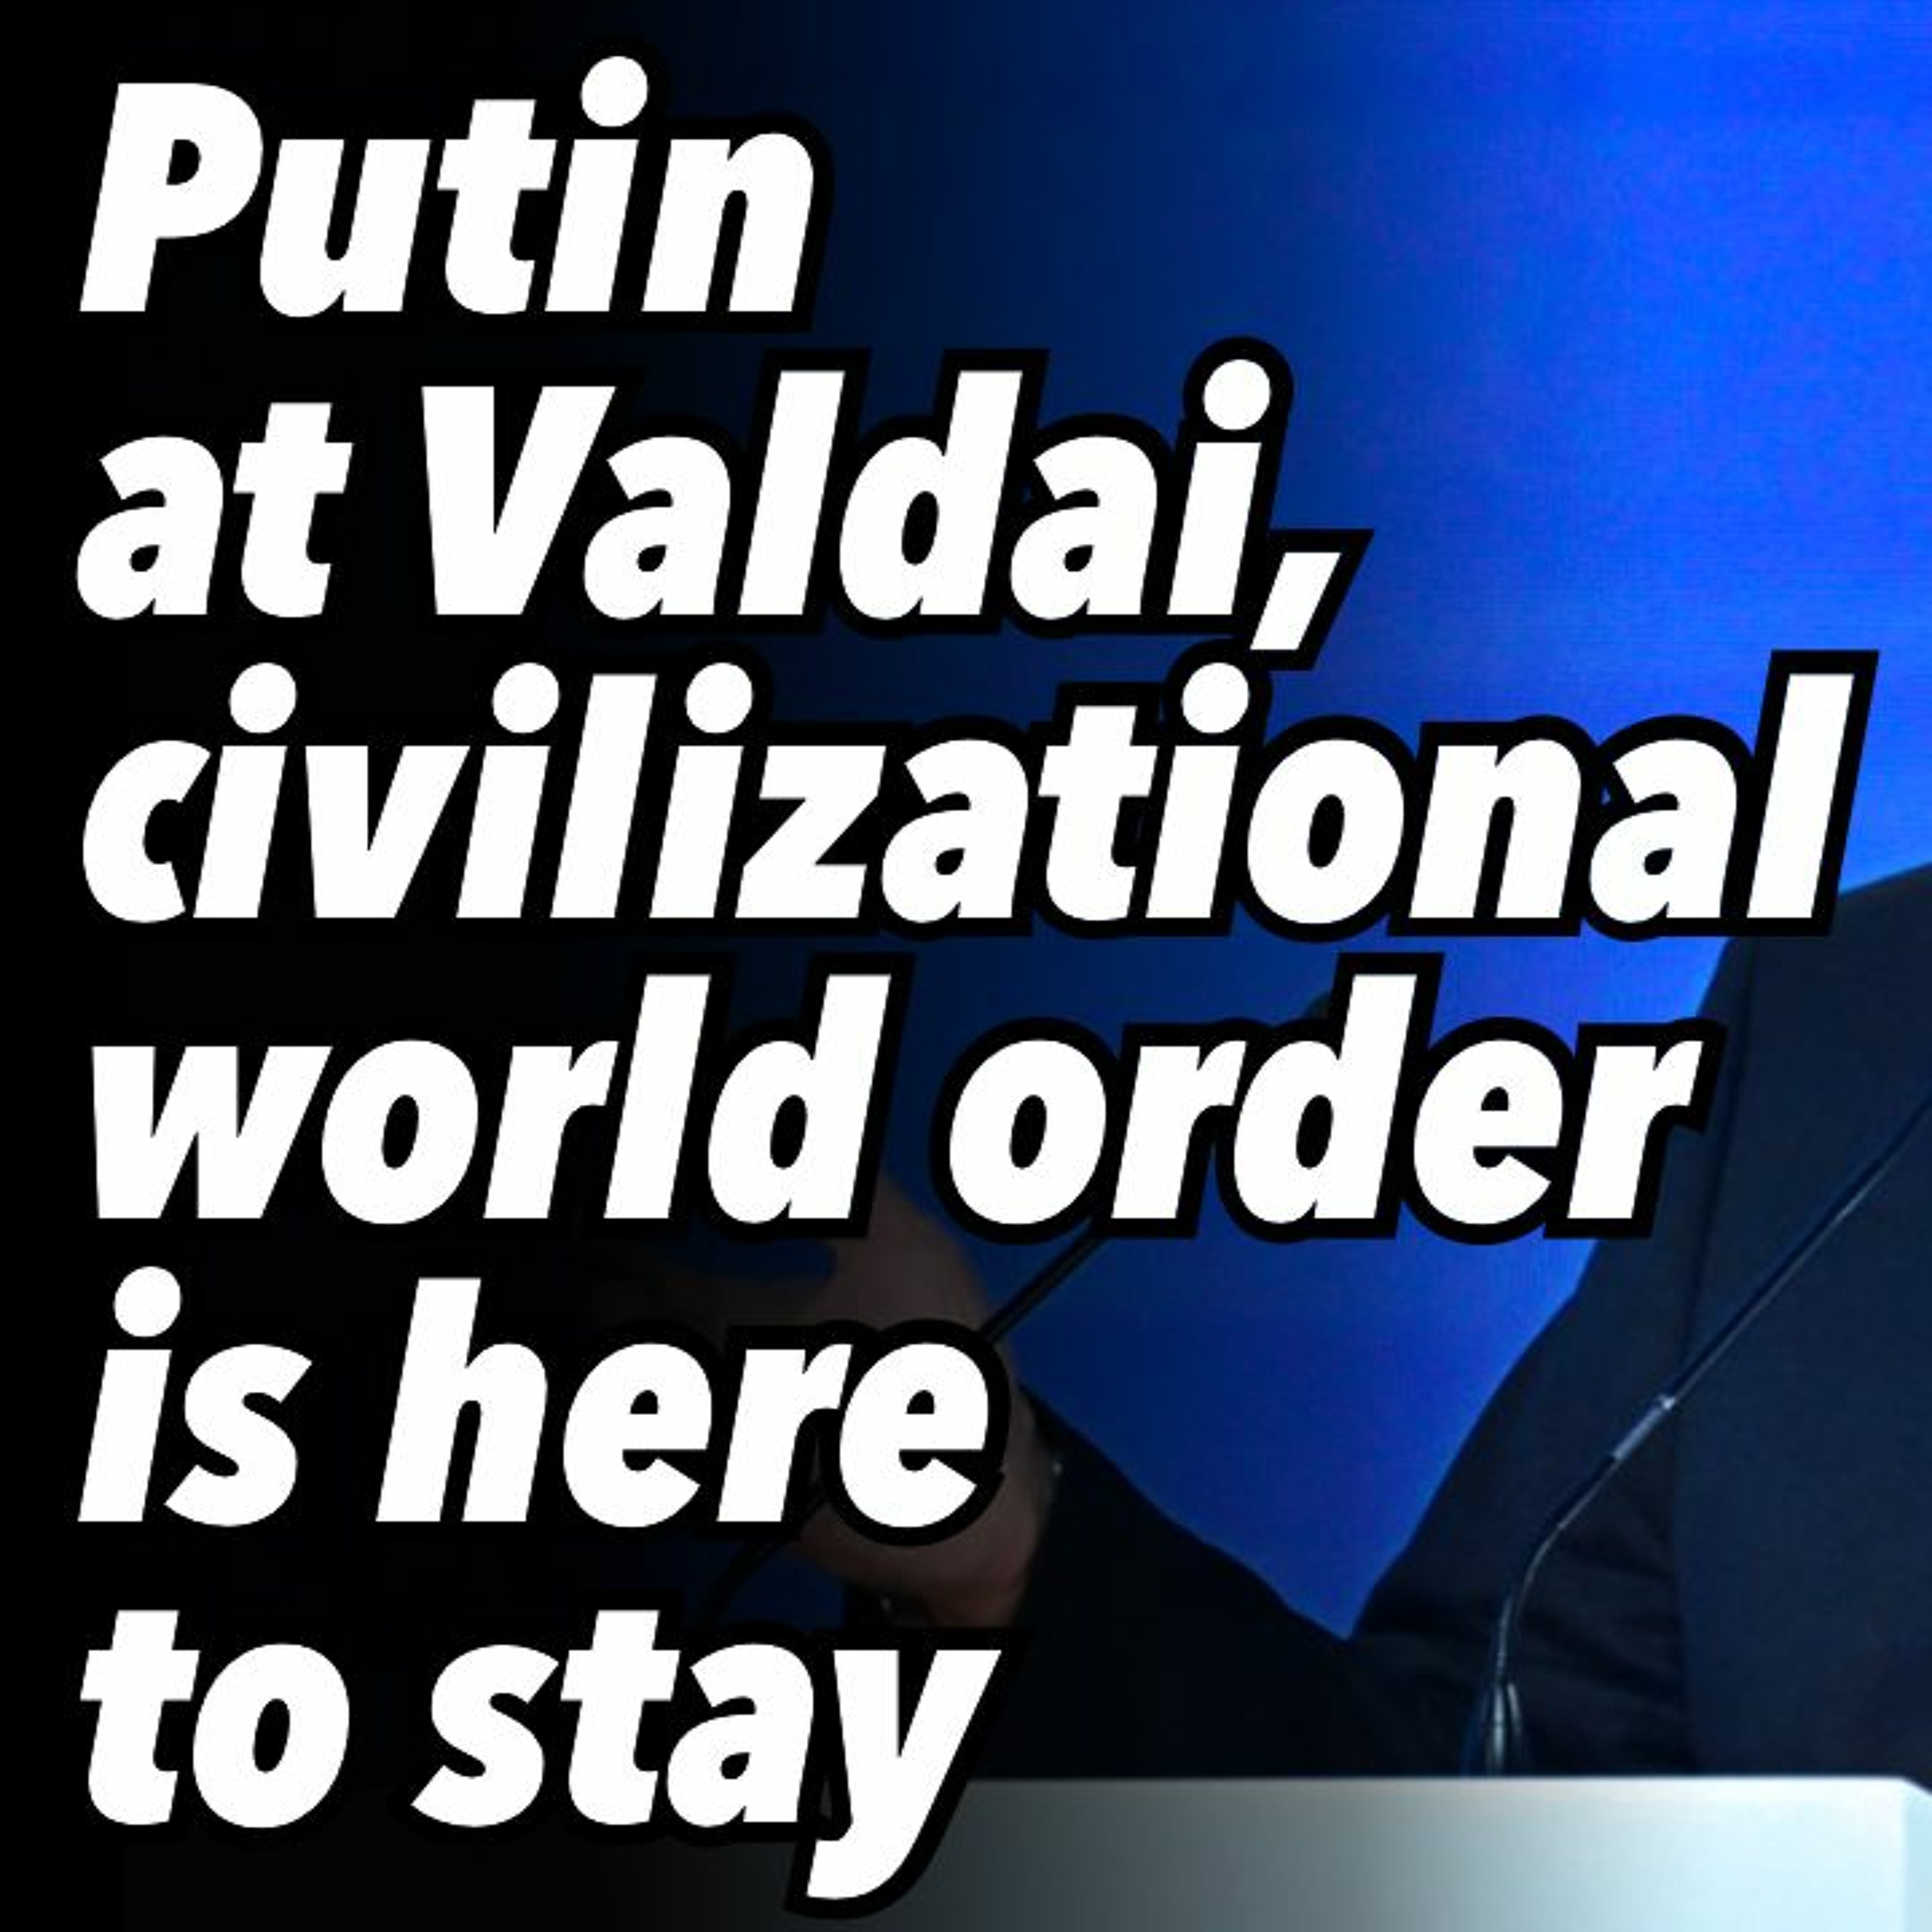 Putin at Valdai, civilizational world order is here to stay